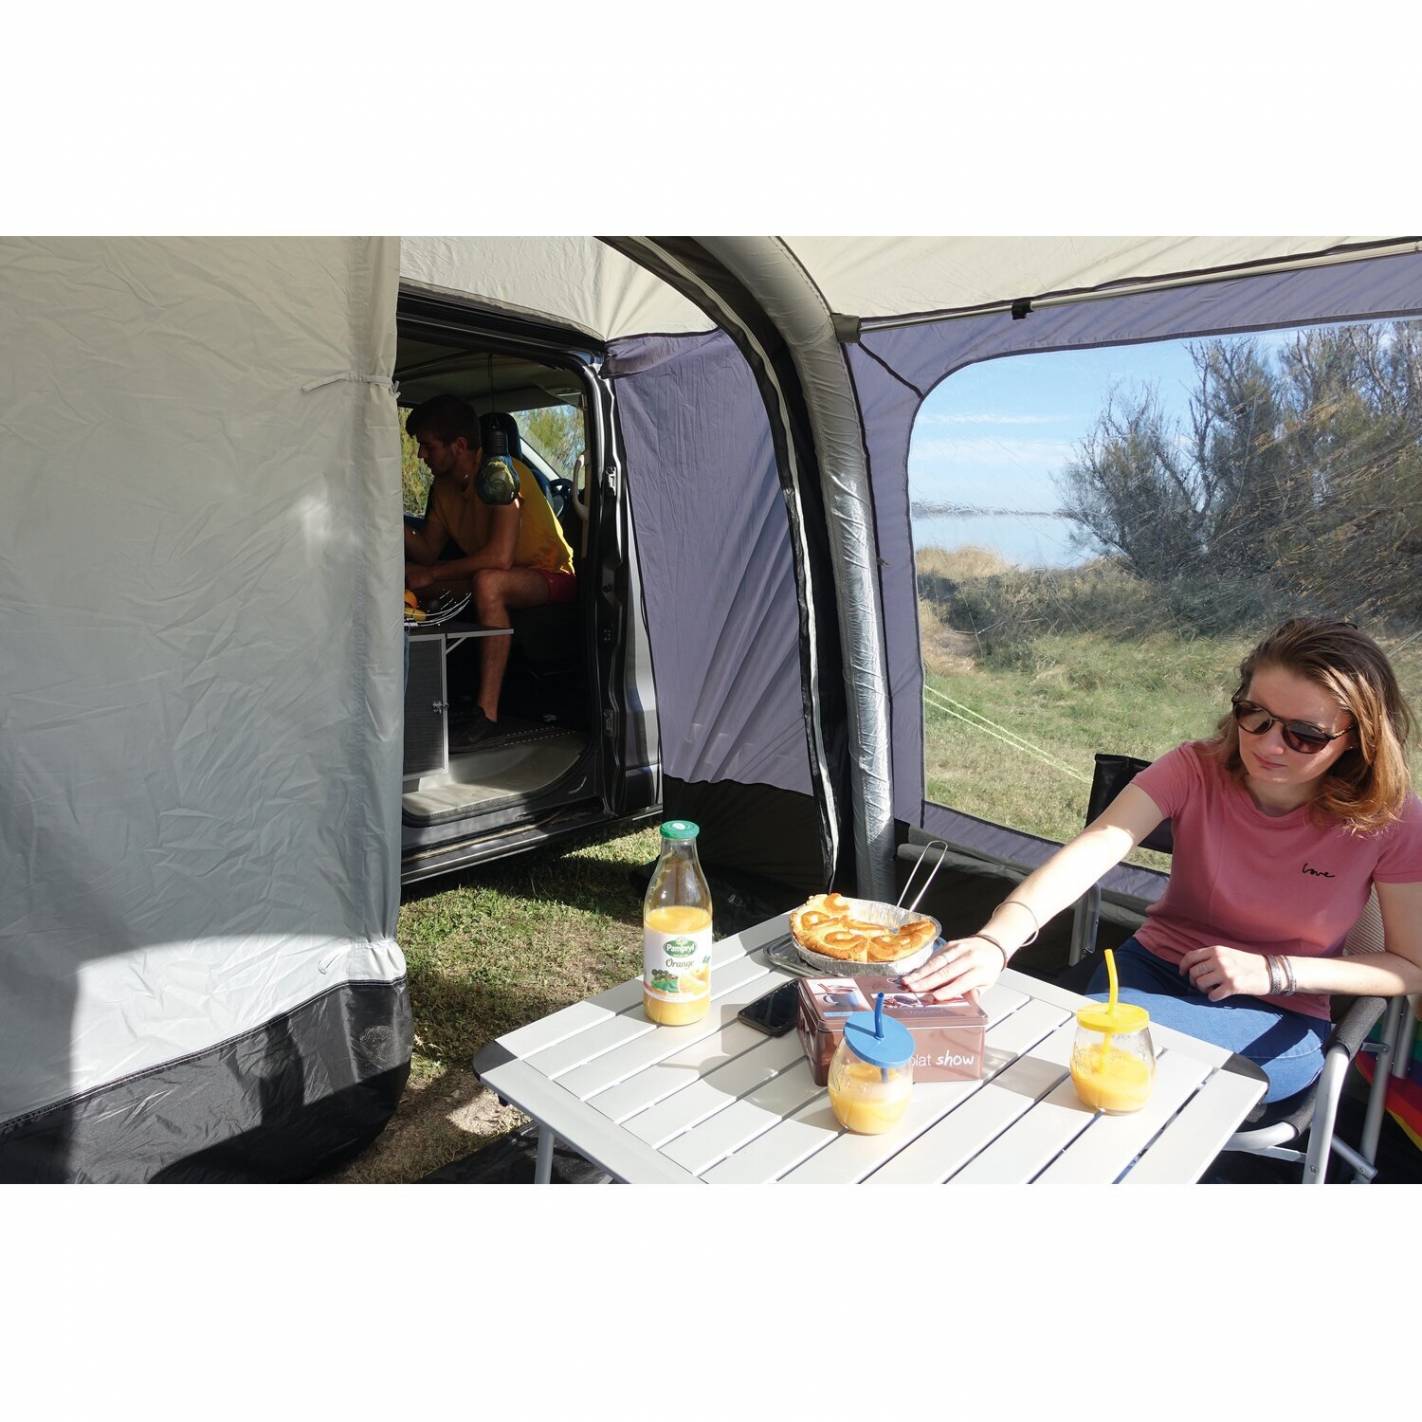 Table de camping pliante en aluminium pour 2 personnes - Just4Camper Baya  Sun RG-078711